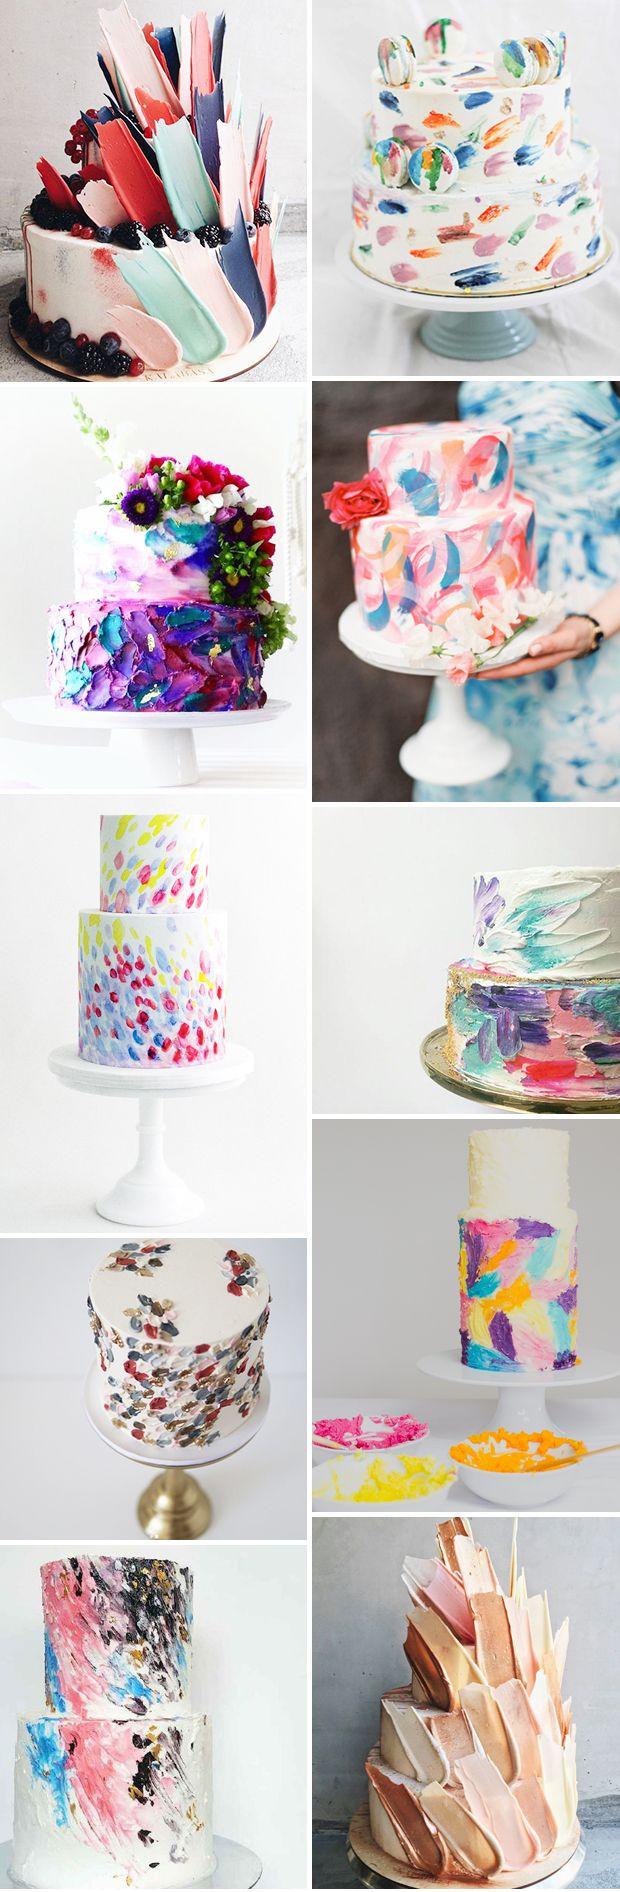 Свадьба - Brushstroke Cakes - 12 Phenomenal Wedding Cake Works Of Art